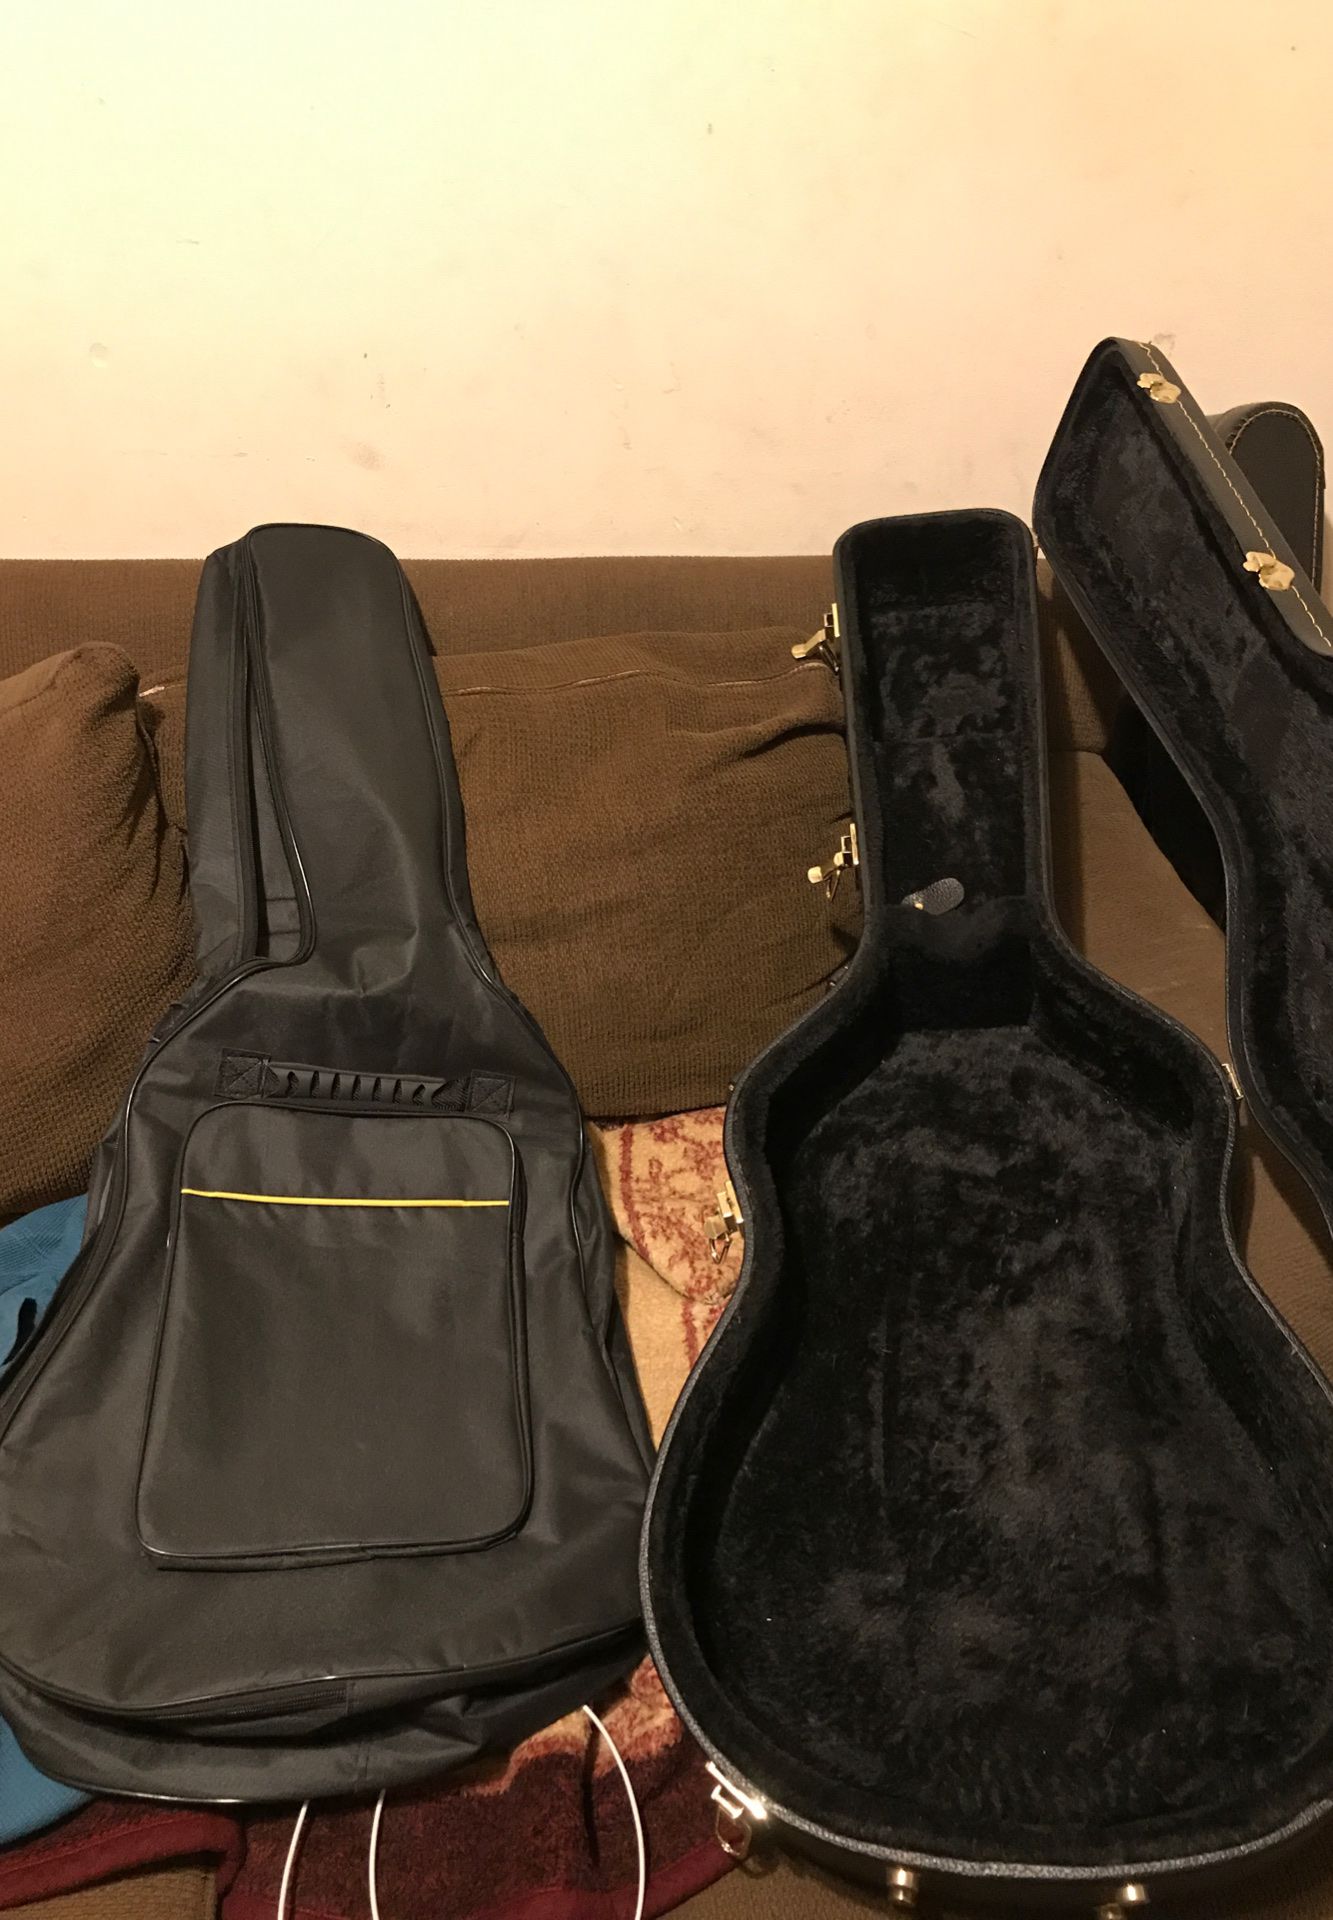 Guitar case end bag